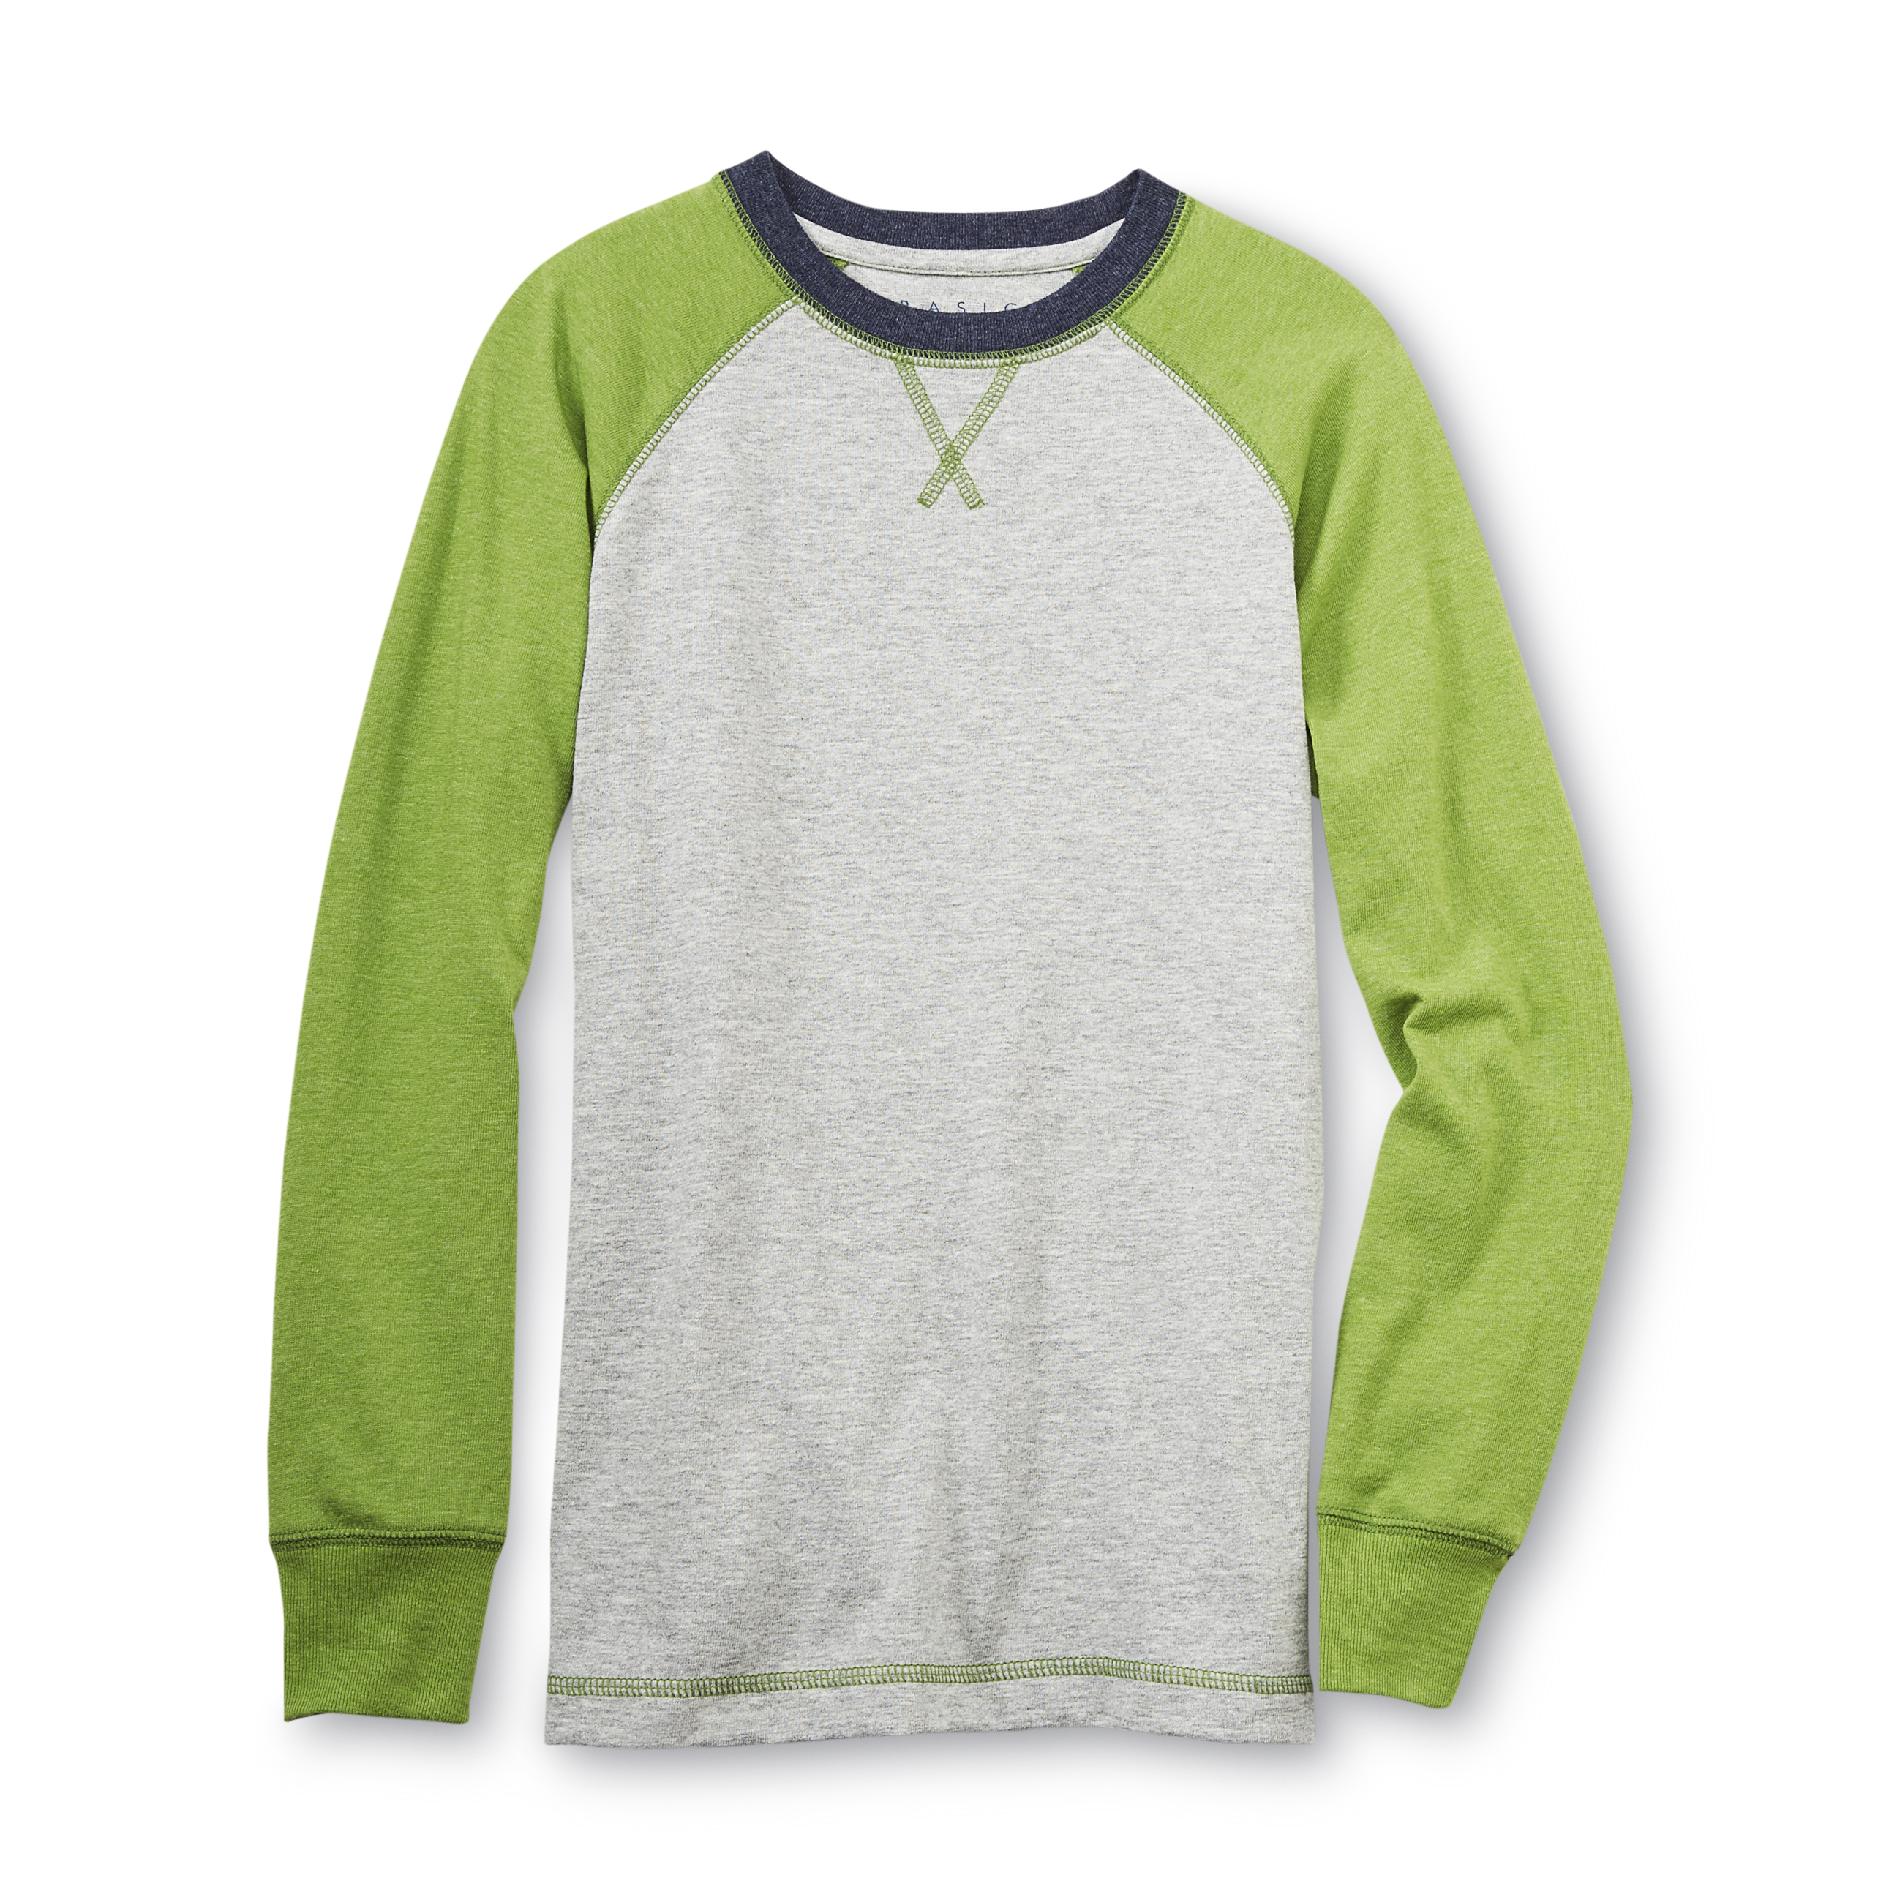 Basic Editions Boy's Raglan Long-Sleeve T-Shirt - Colorblock